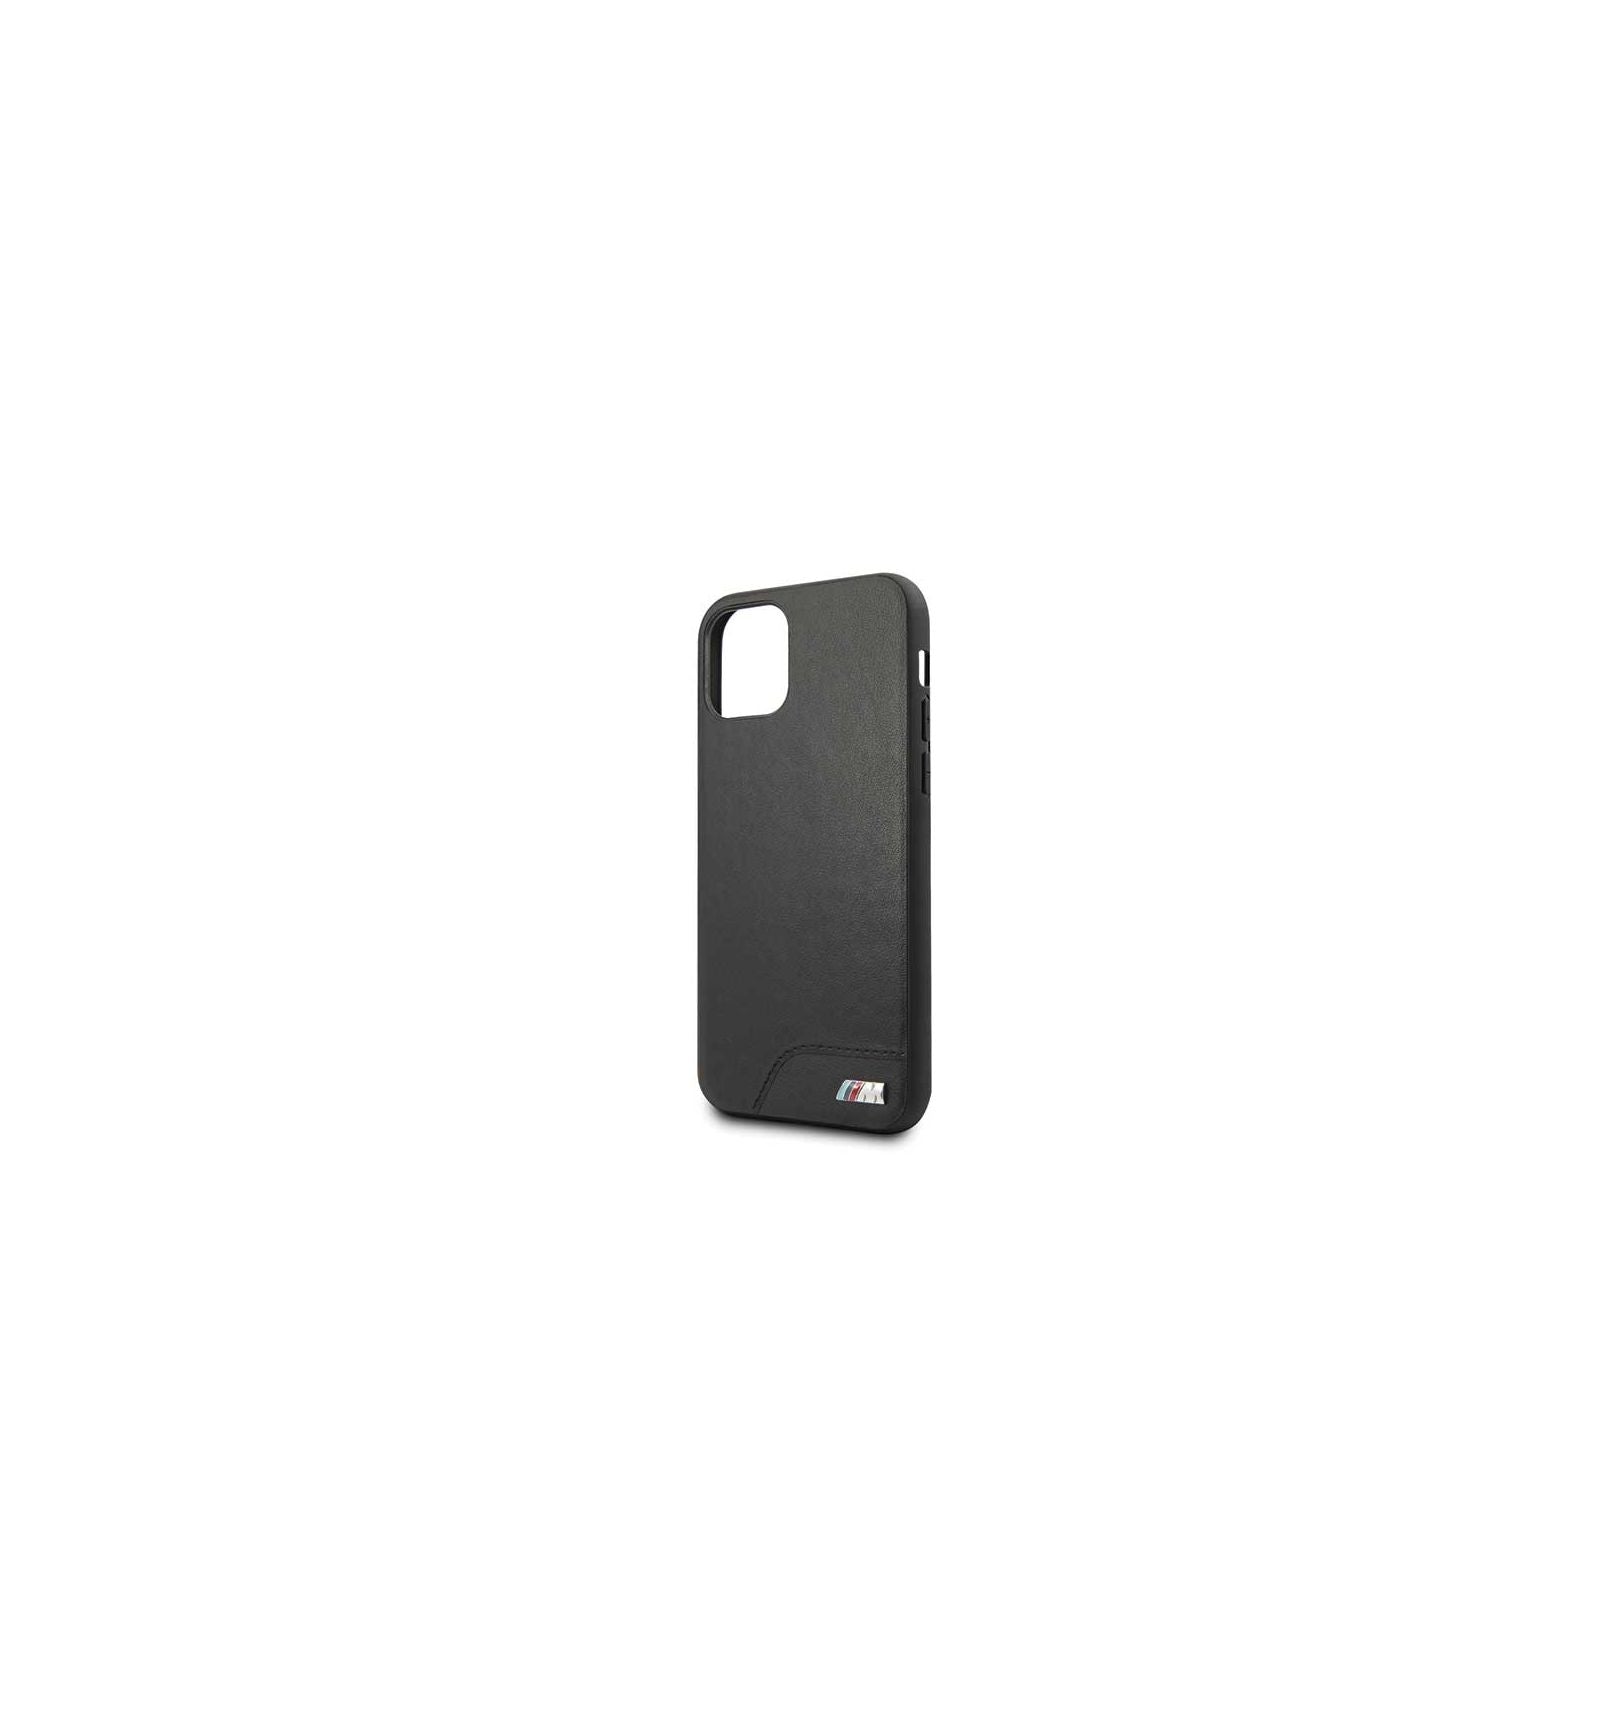 Coque noire pour iPhone 11 Pro Max BMW collection M-Experience